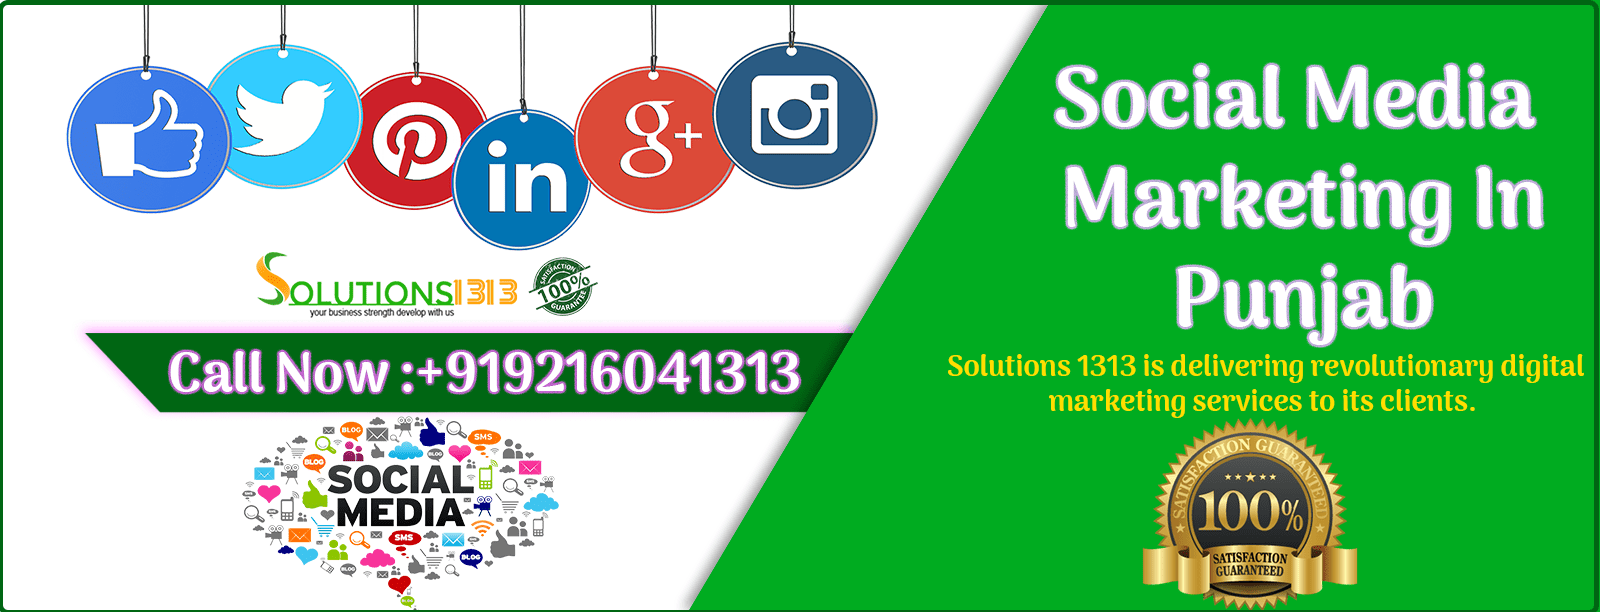 Social Media Marketing Company in Punjab - Contact +919216041313